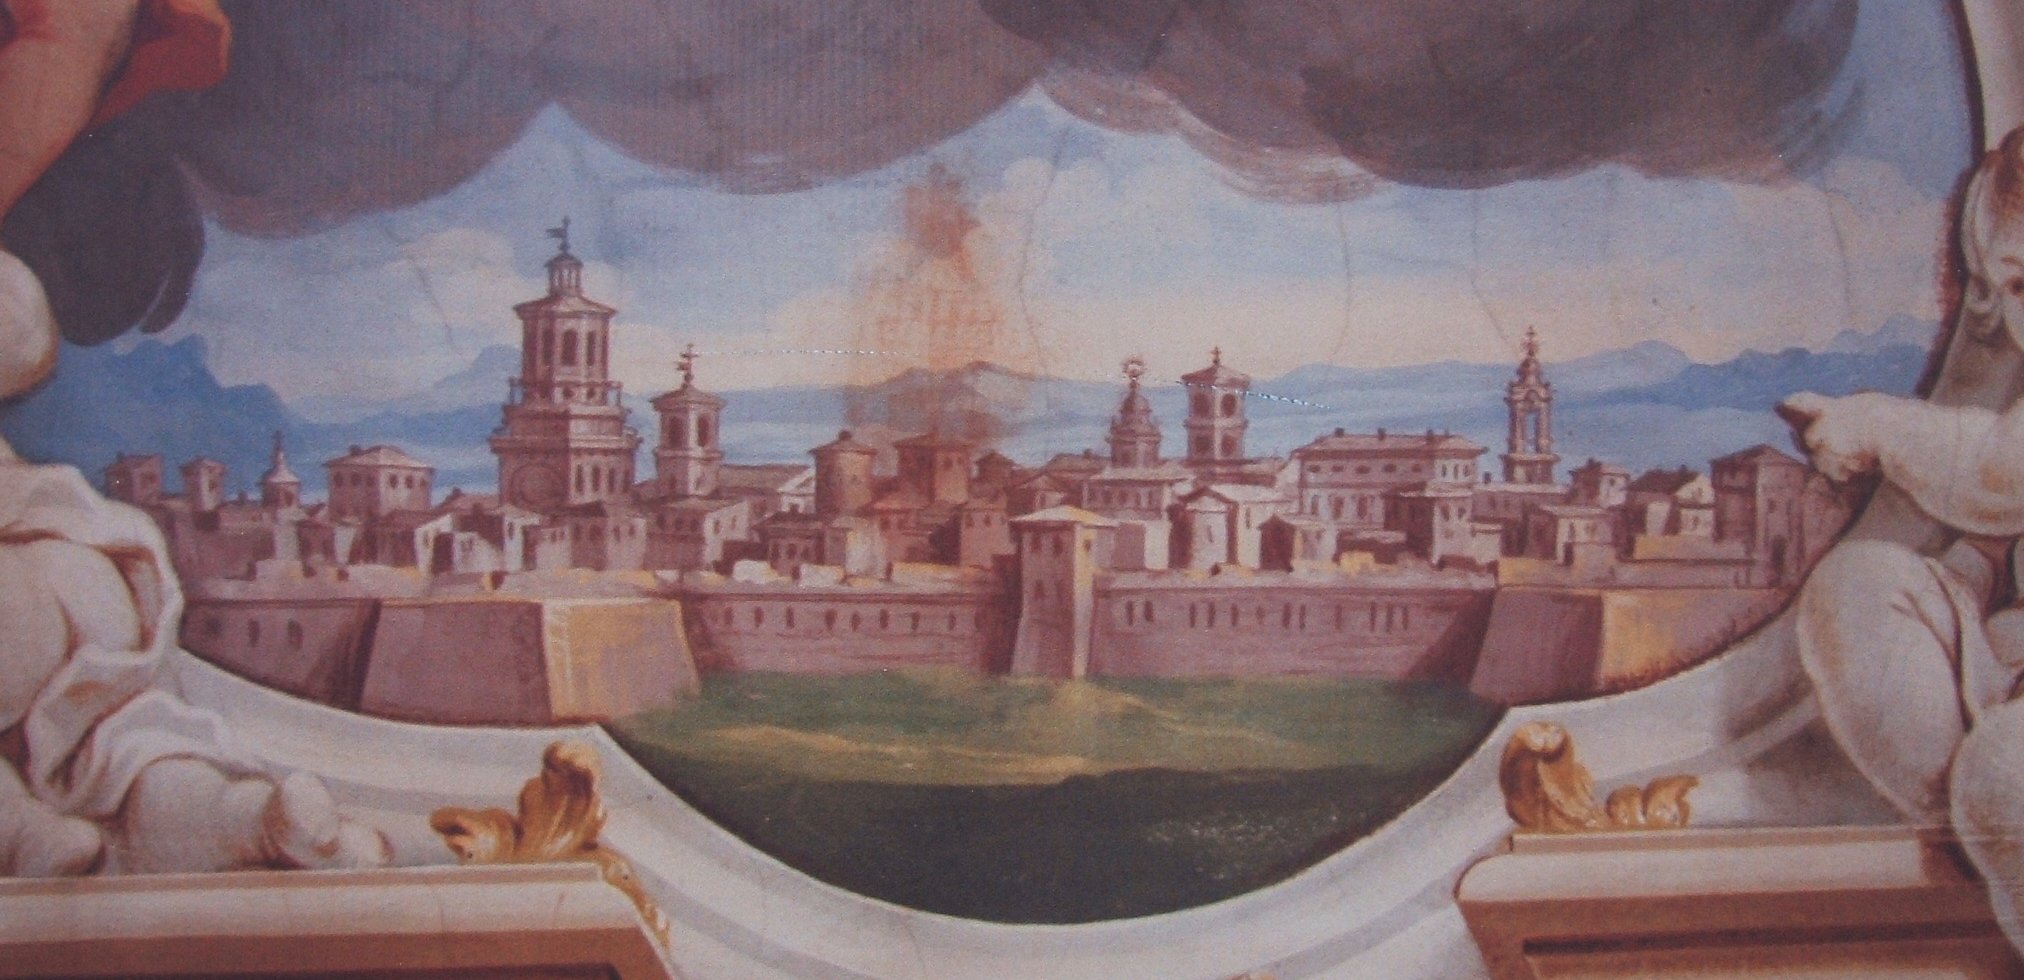 Savigliano im Mittelalter, Fresko in der Kirche Santa Maria Assunta in Savigliano